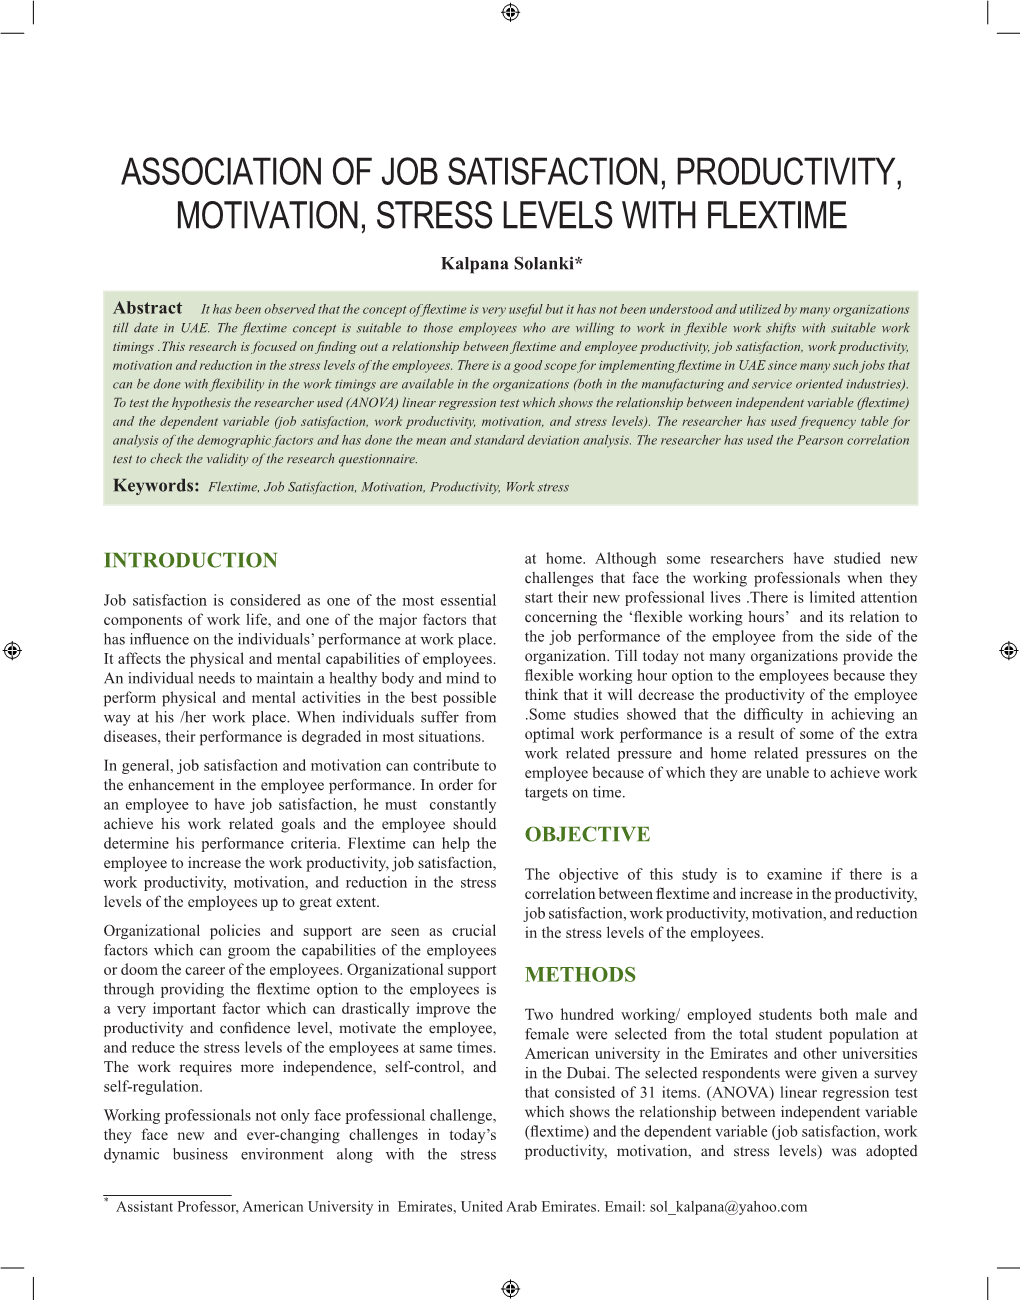 Association of Job Satisfaction, Productivity, Motivation, Stress Levels with Flextime